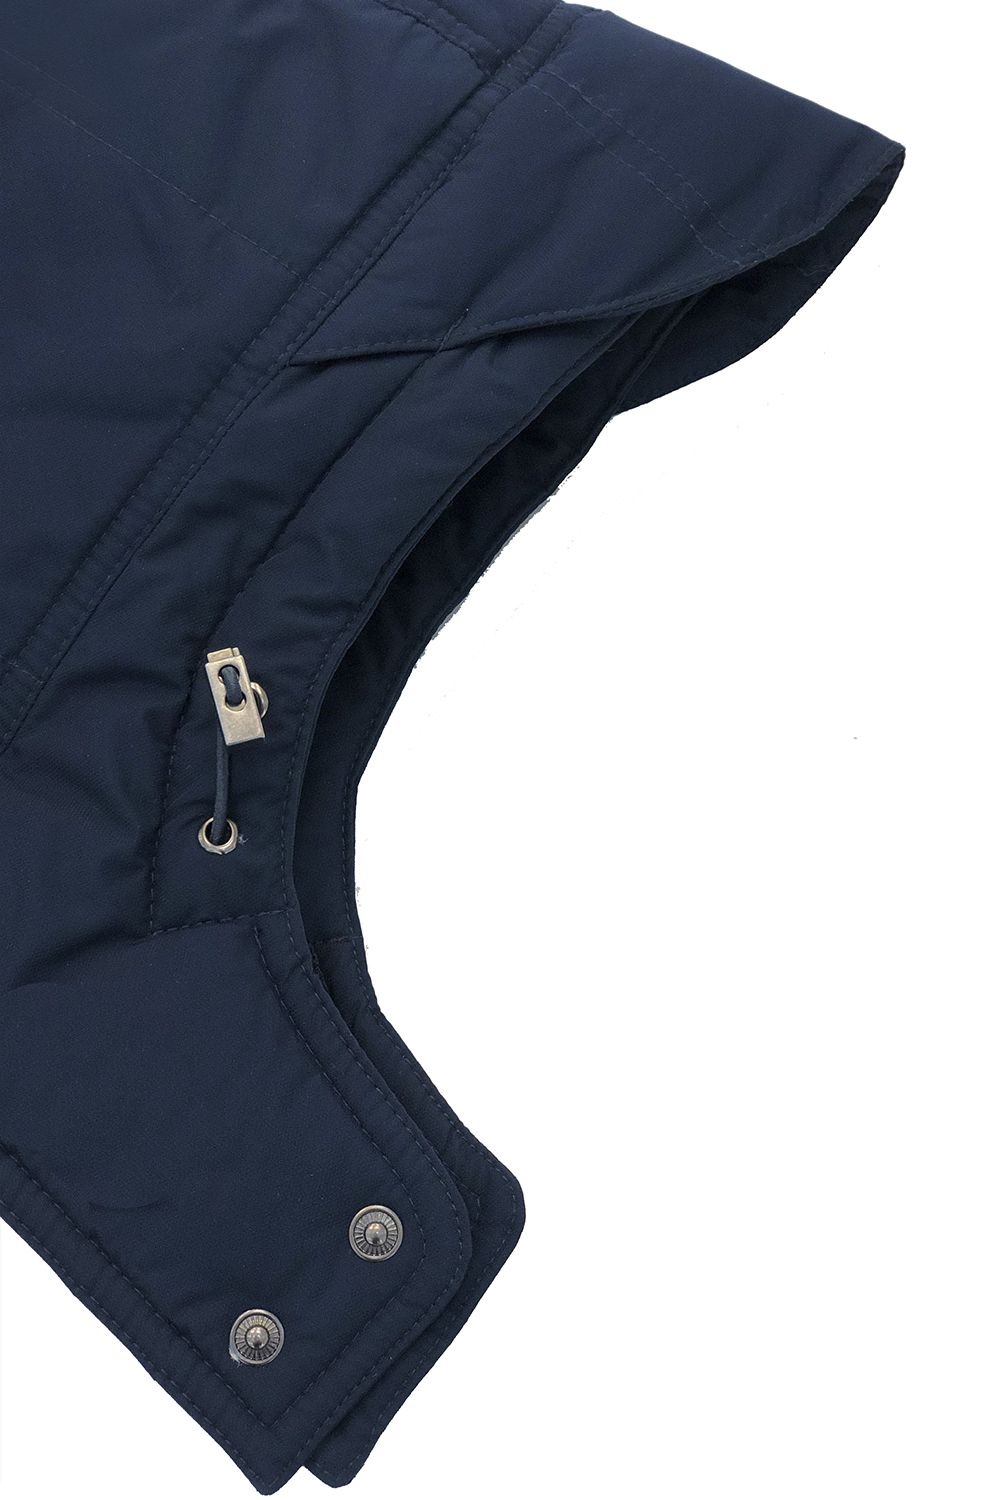 Куртка Pulka, размер 98, цвет синий PUFWB-916-10119-326 - фото 7